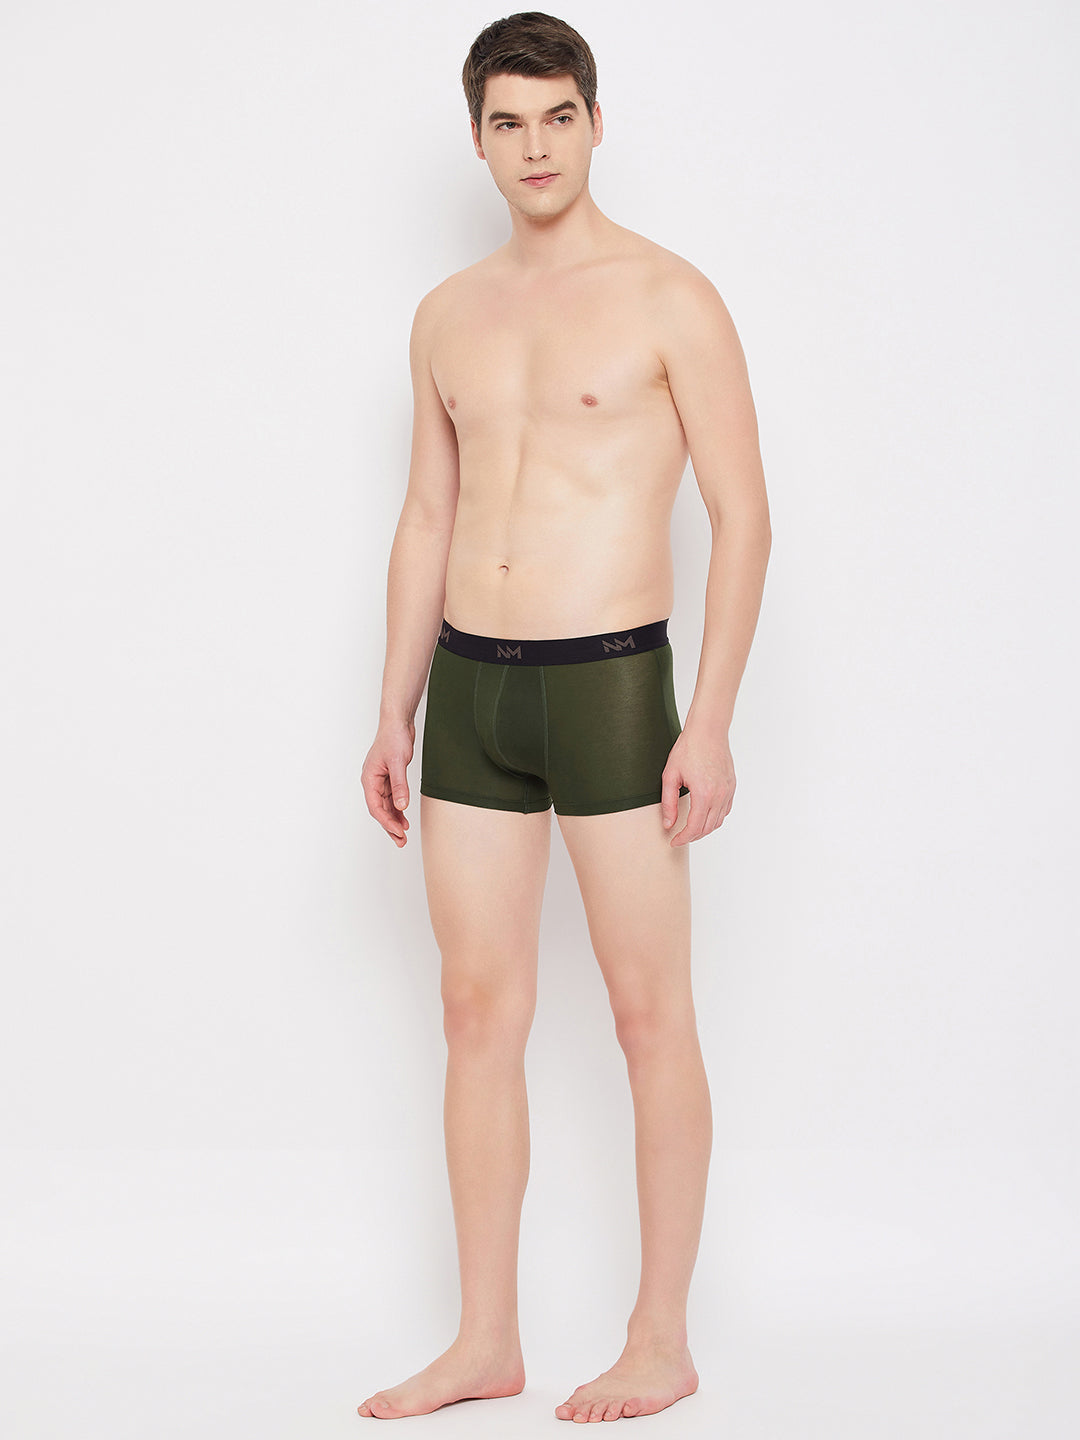 Neva Modal Solid Ultra Short Trunk Underwear for Men- Blue, Olive, Steel Grey Collection (Pack of 3)